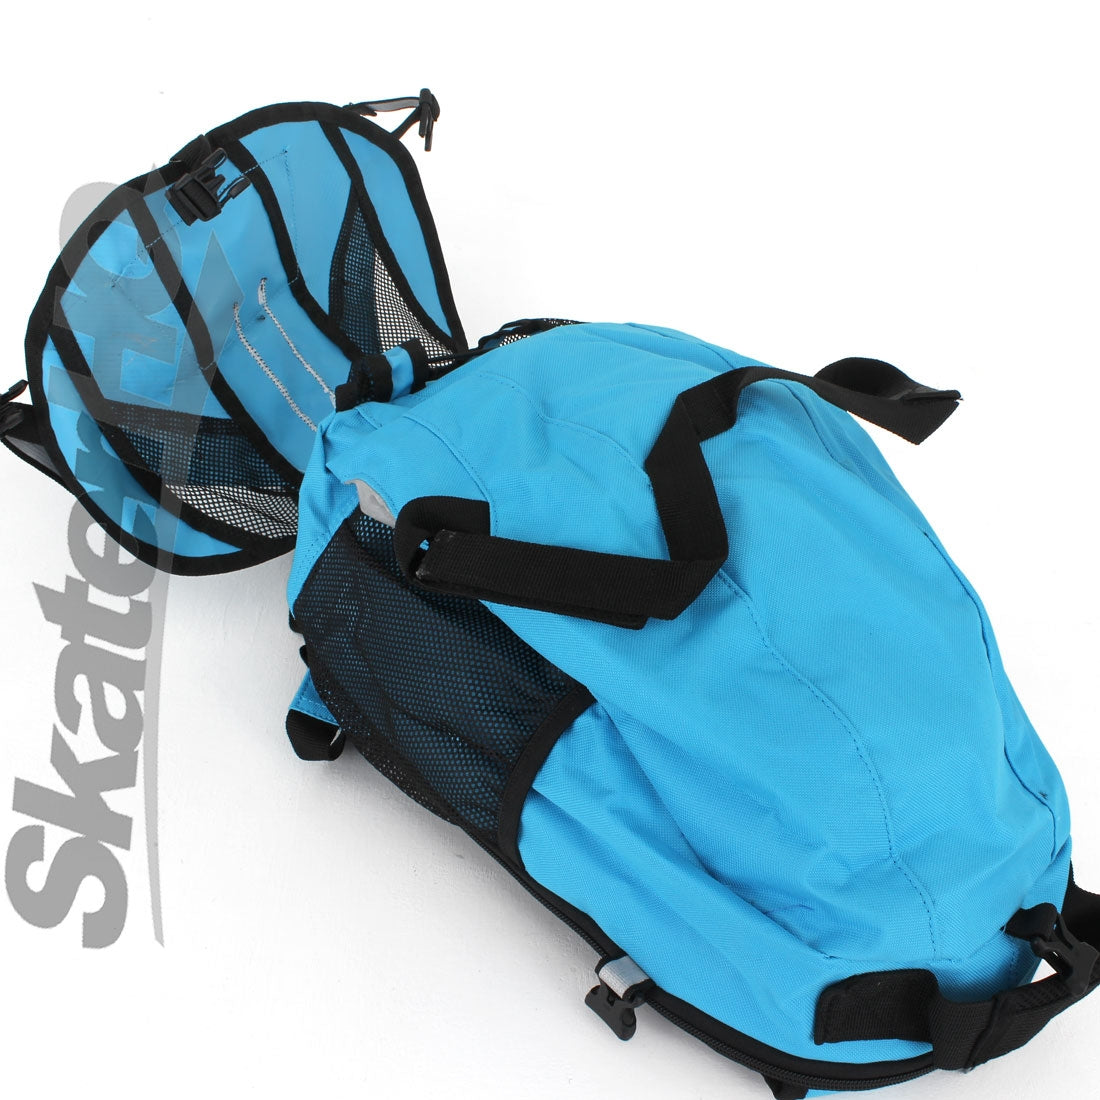 Powerslide Fitness Backpack - Blue Bags and Backpacks